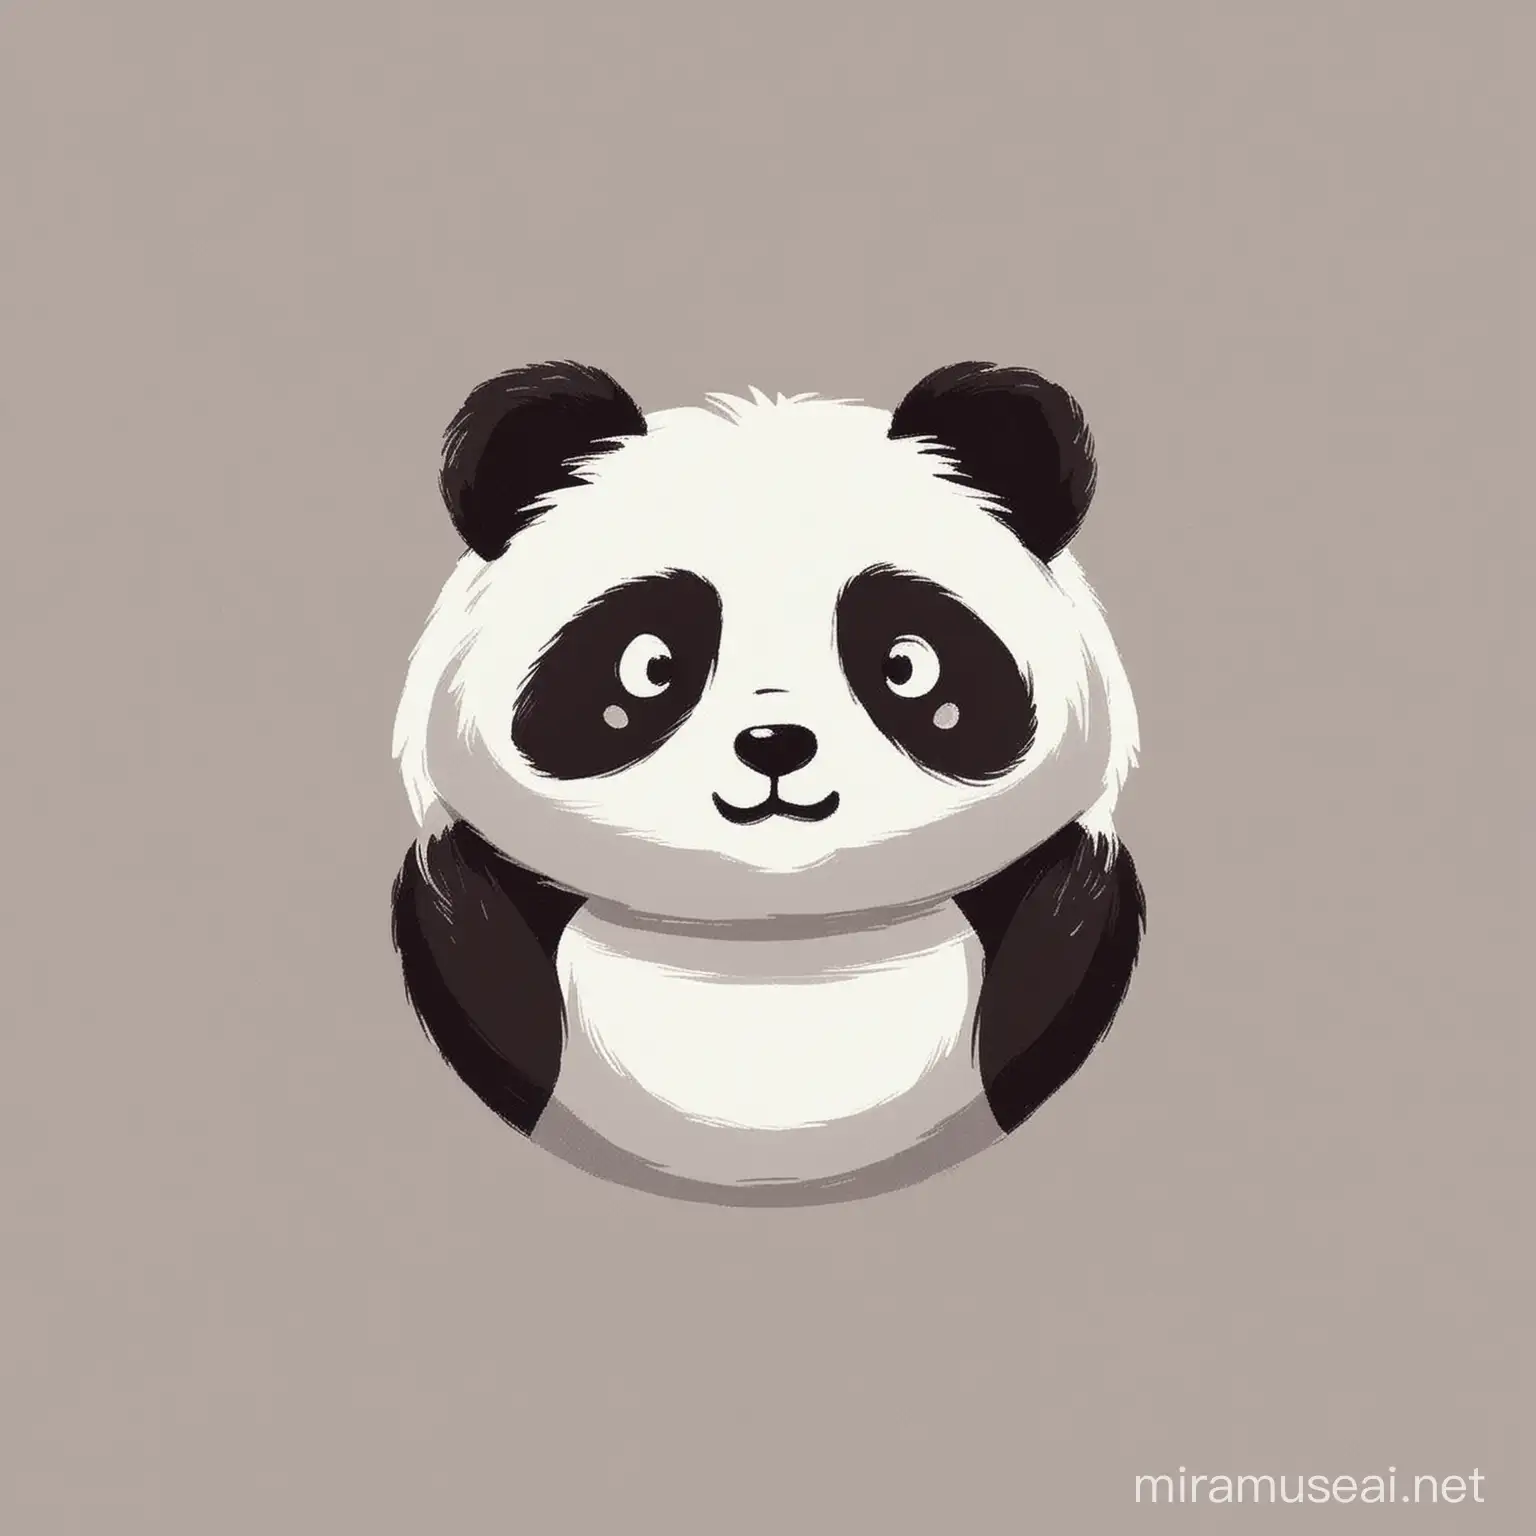 Adorable Panda Logo for Childrens Fashion